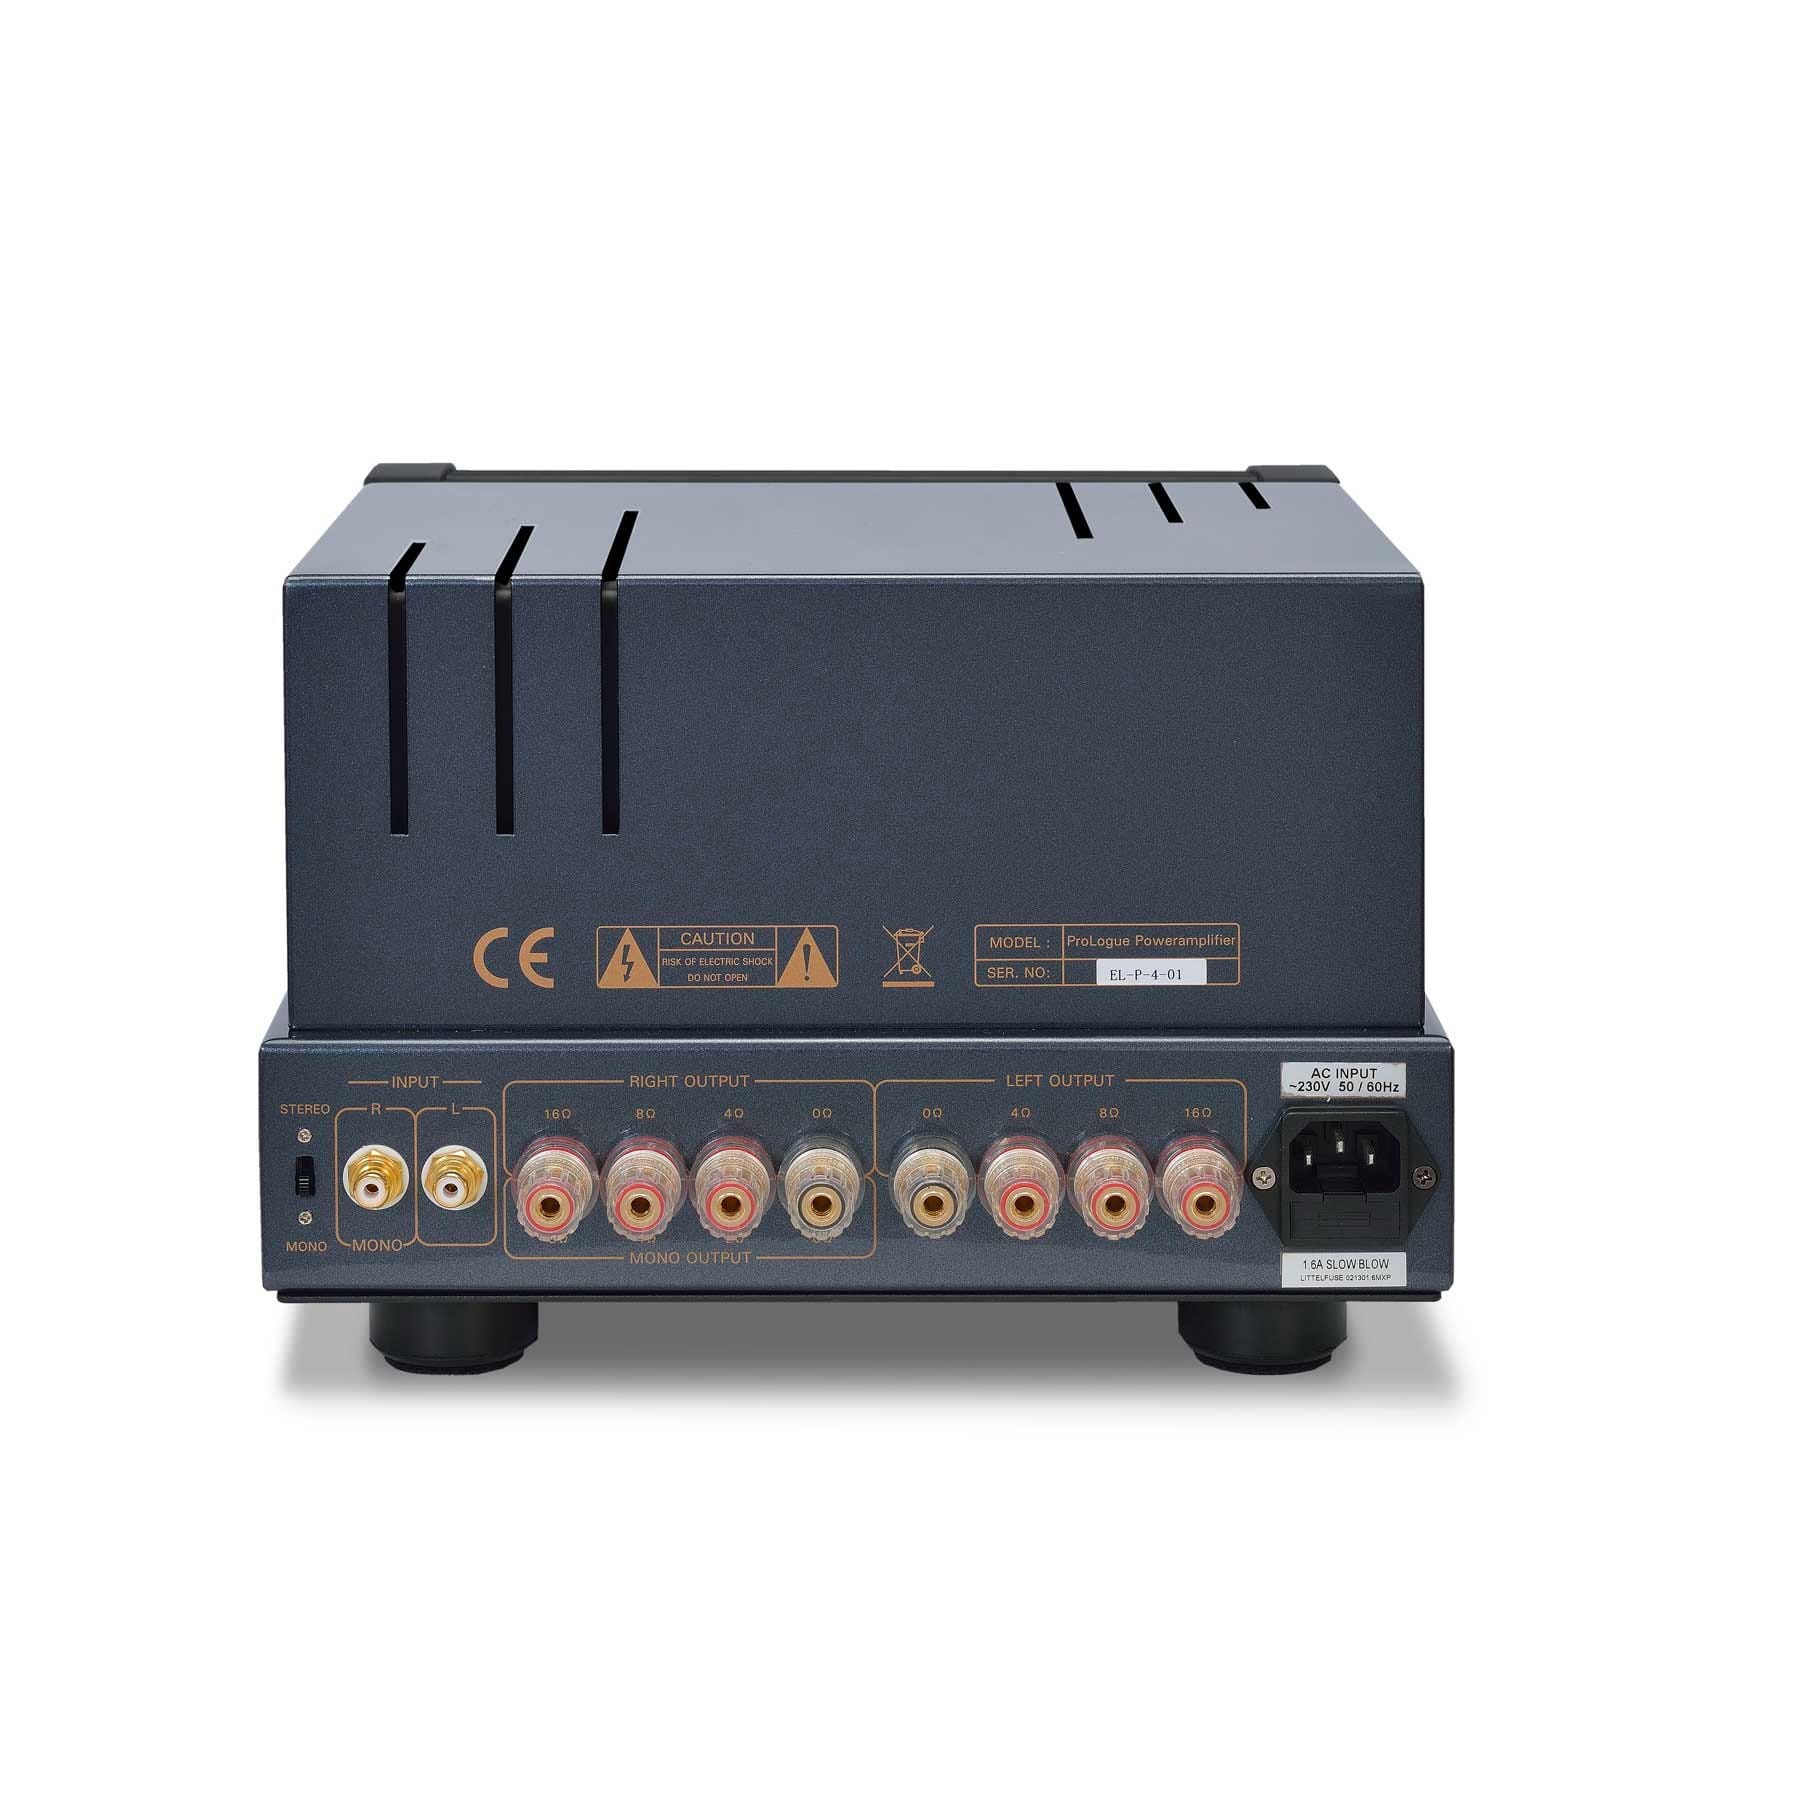 PrimaLuna EVO 100 Power Amplifier Monoblocks (Pair)